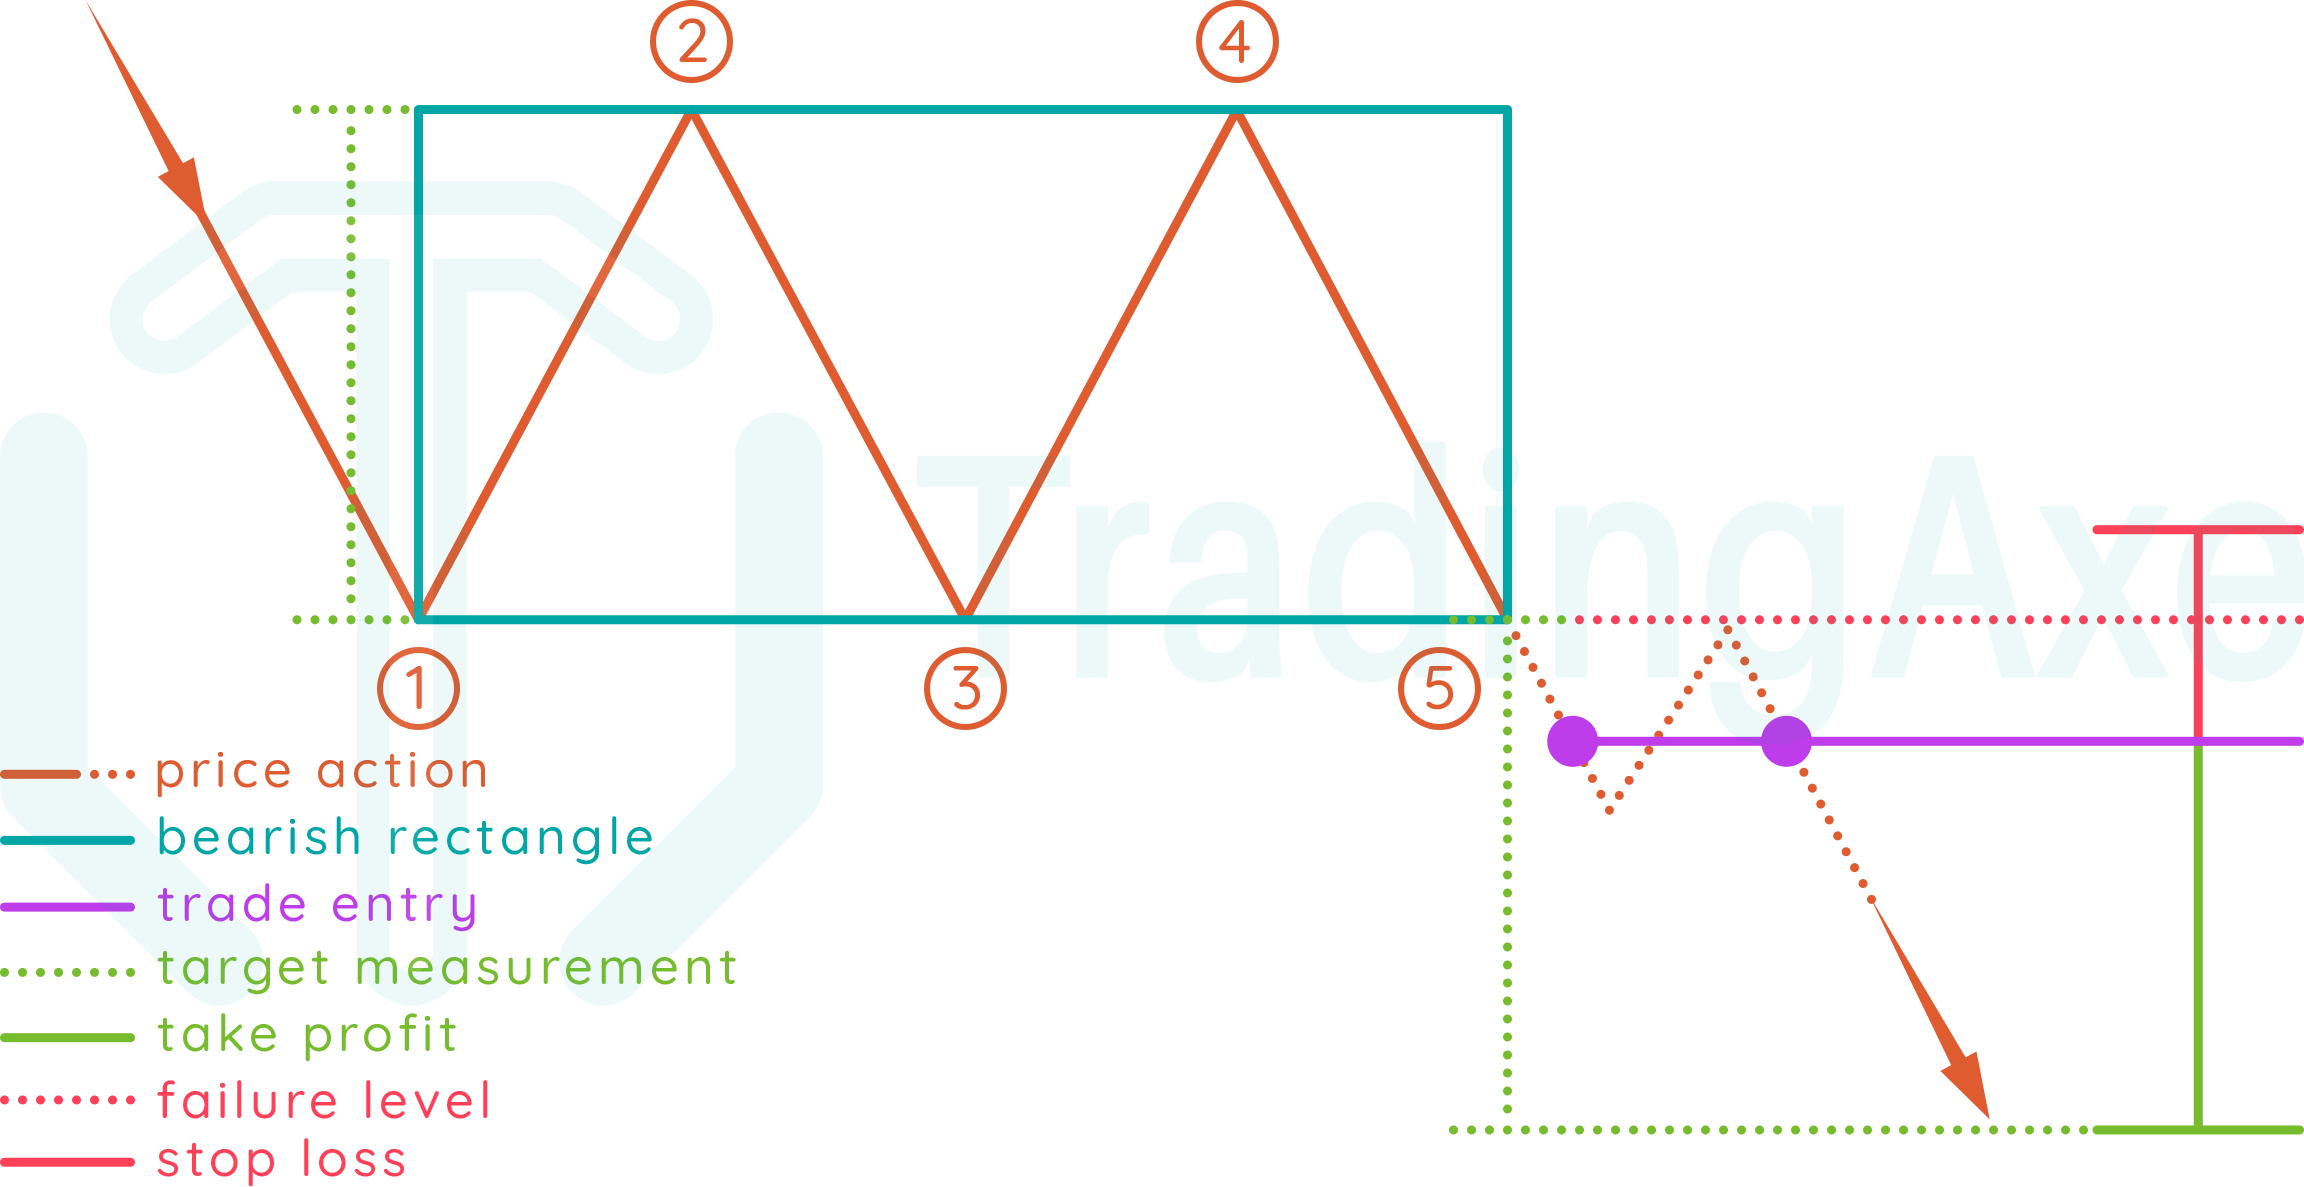 How to trade bearish rectangle chart pattern